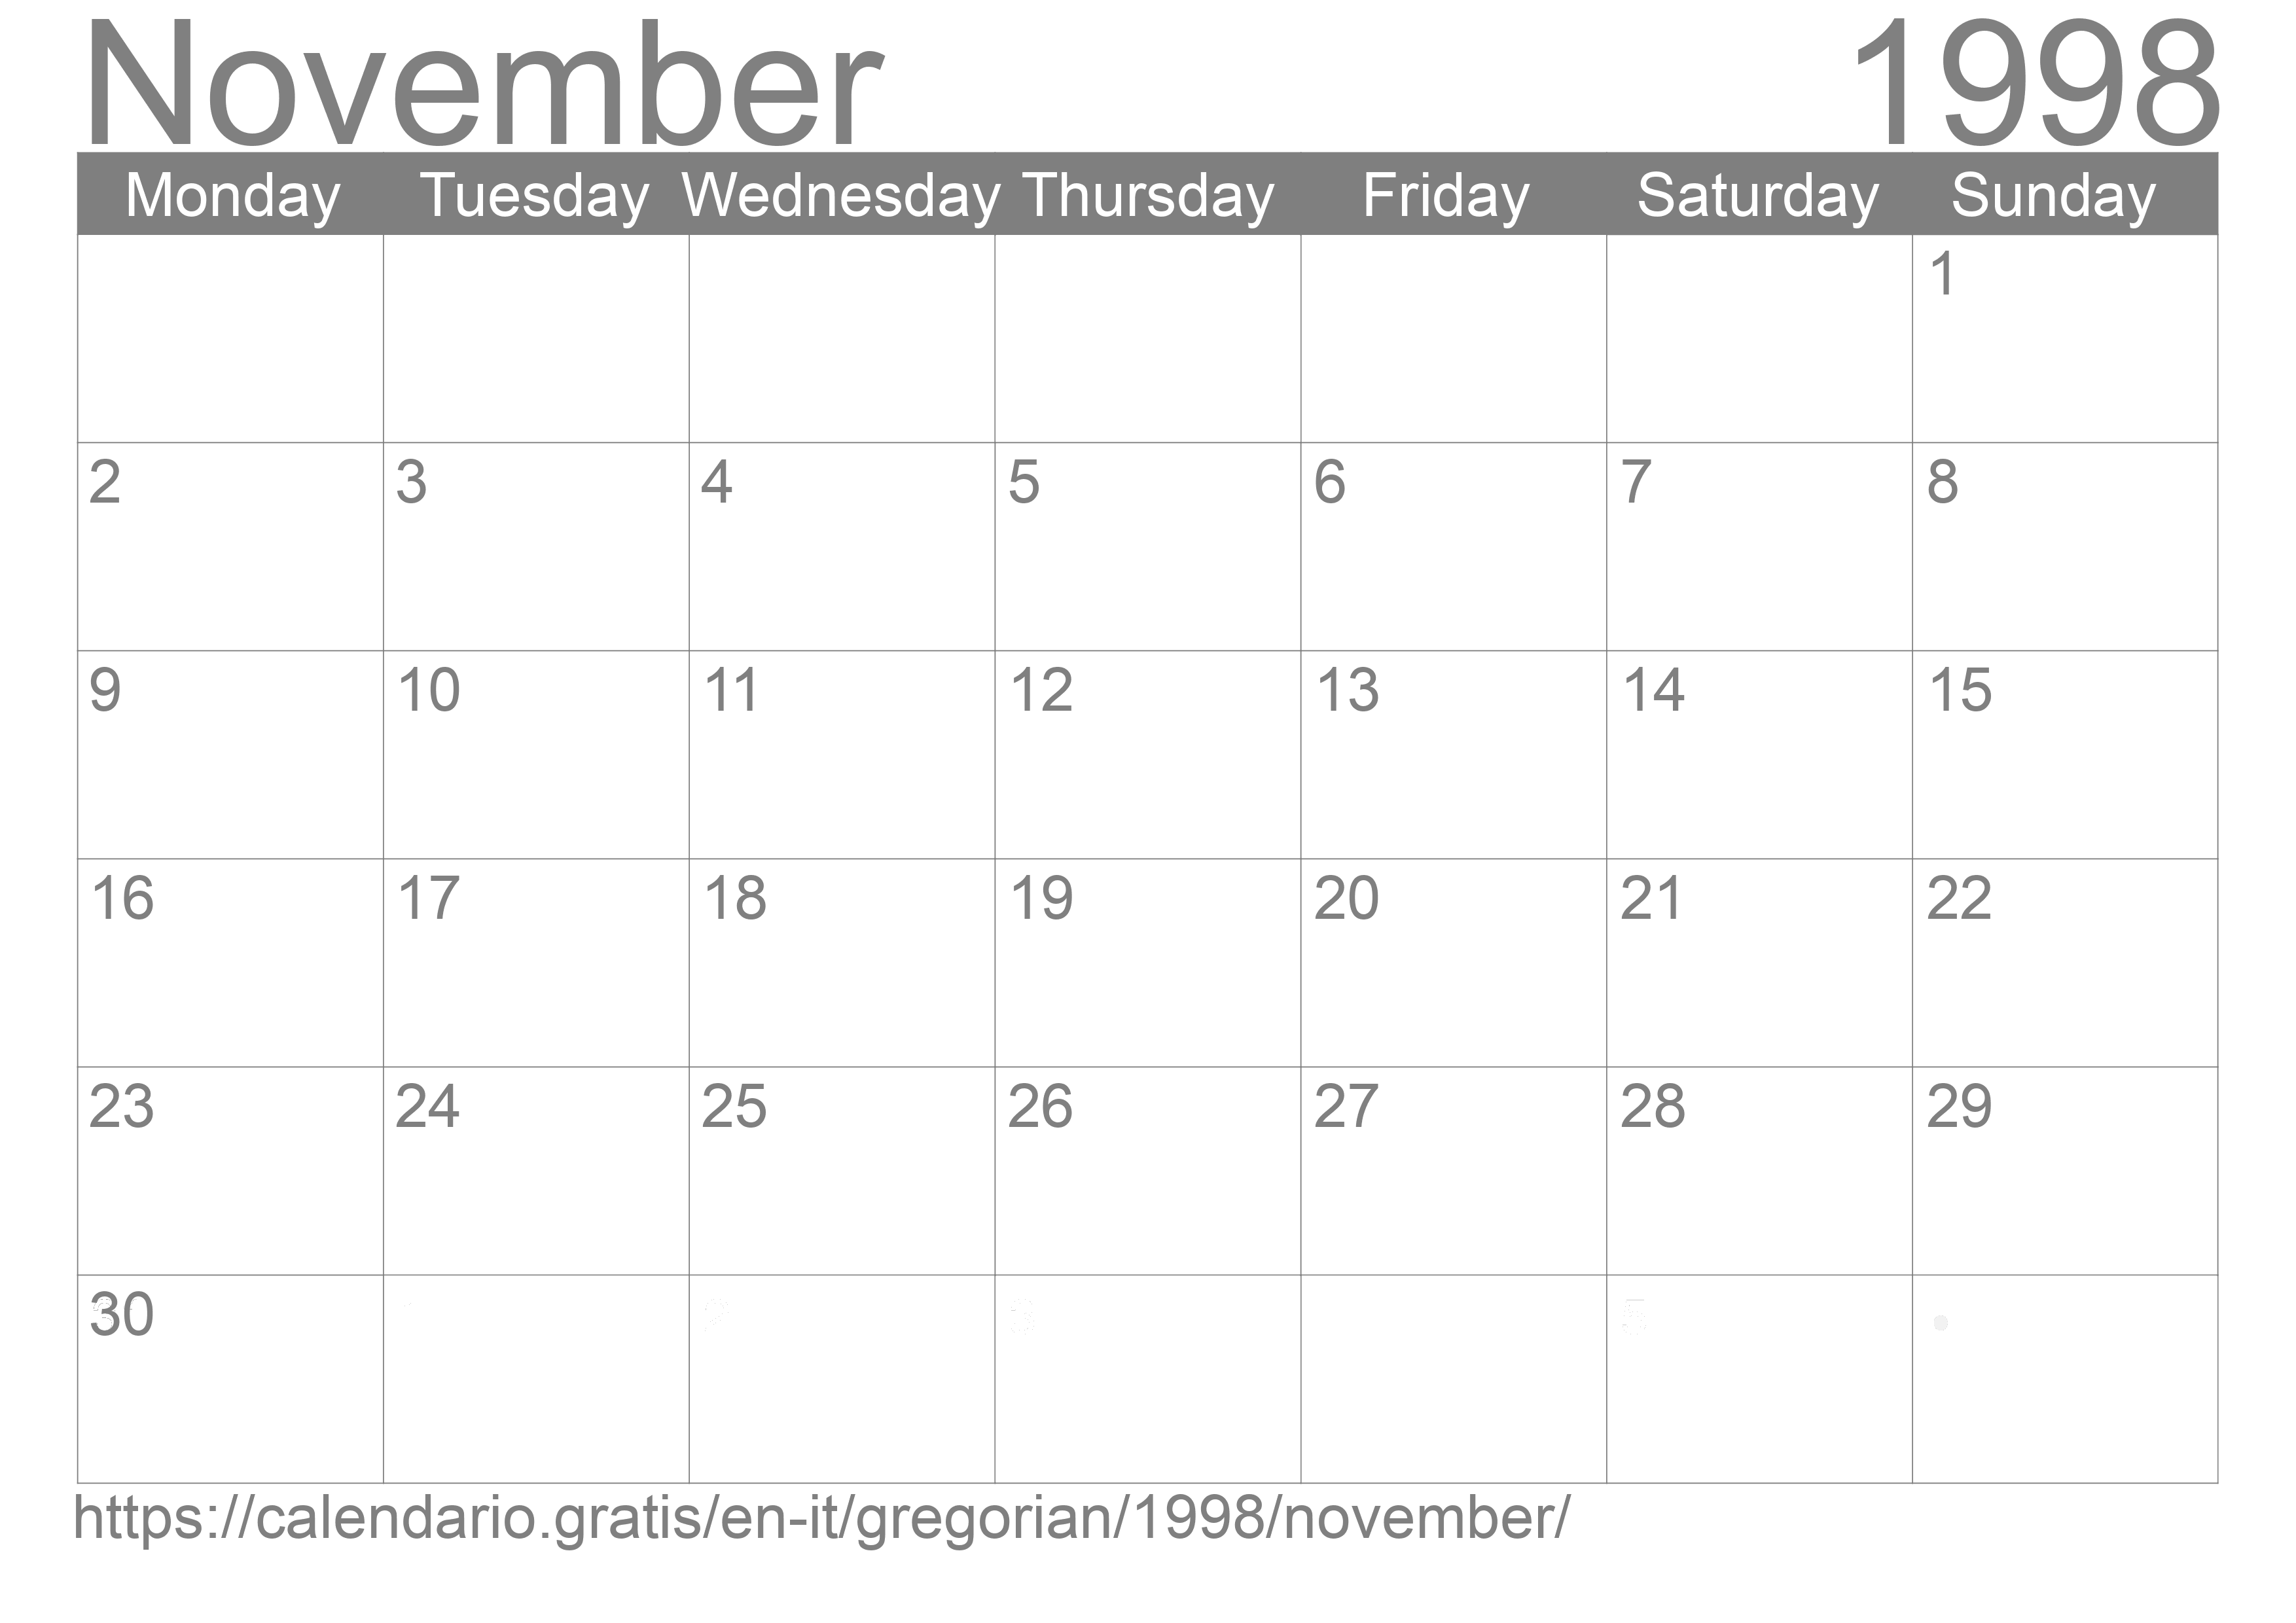 Calendar November 1998 to print